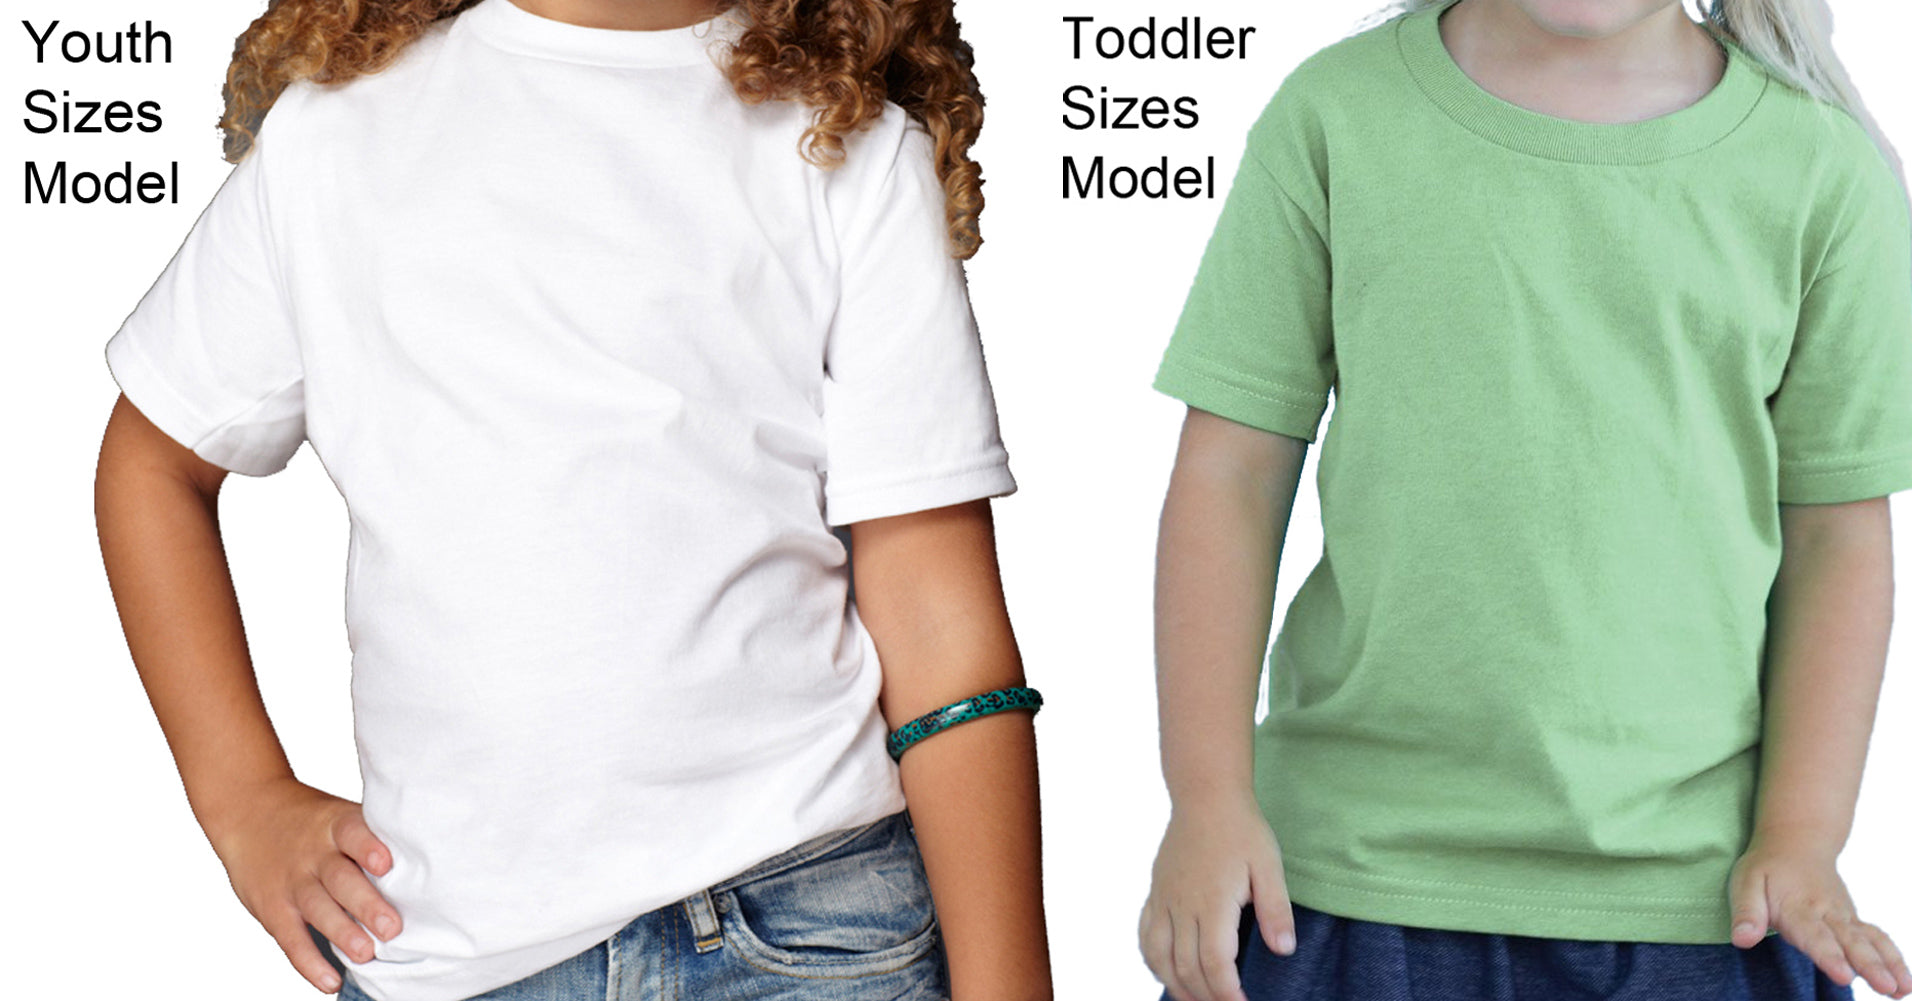 True Long Length T-Shirt - Green